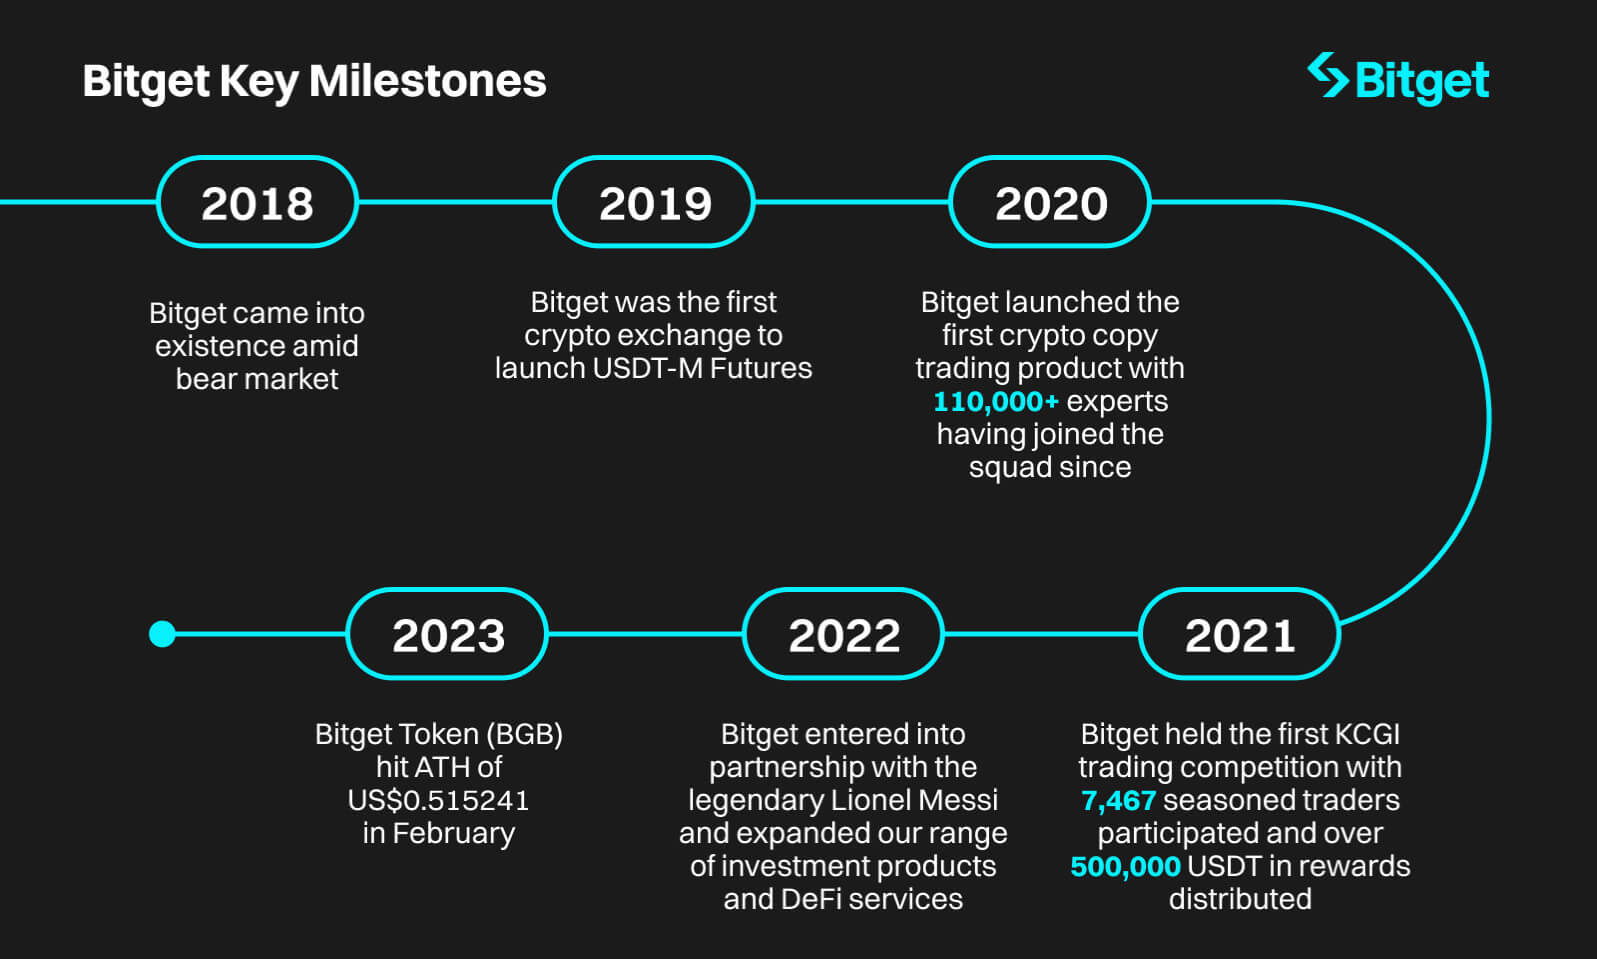 Bitget Key Milestones